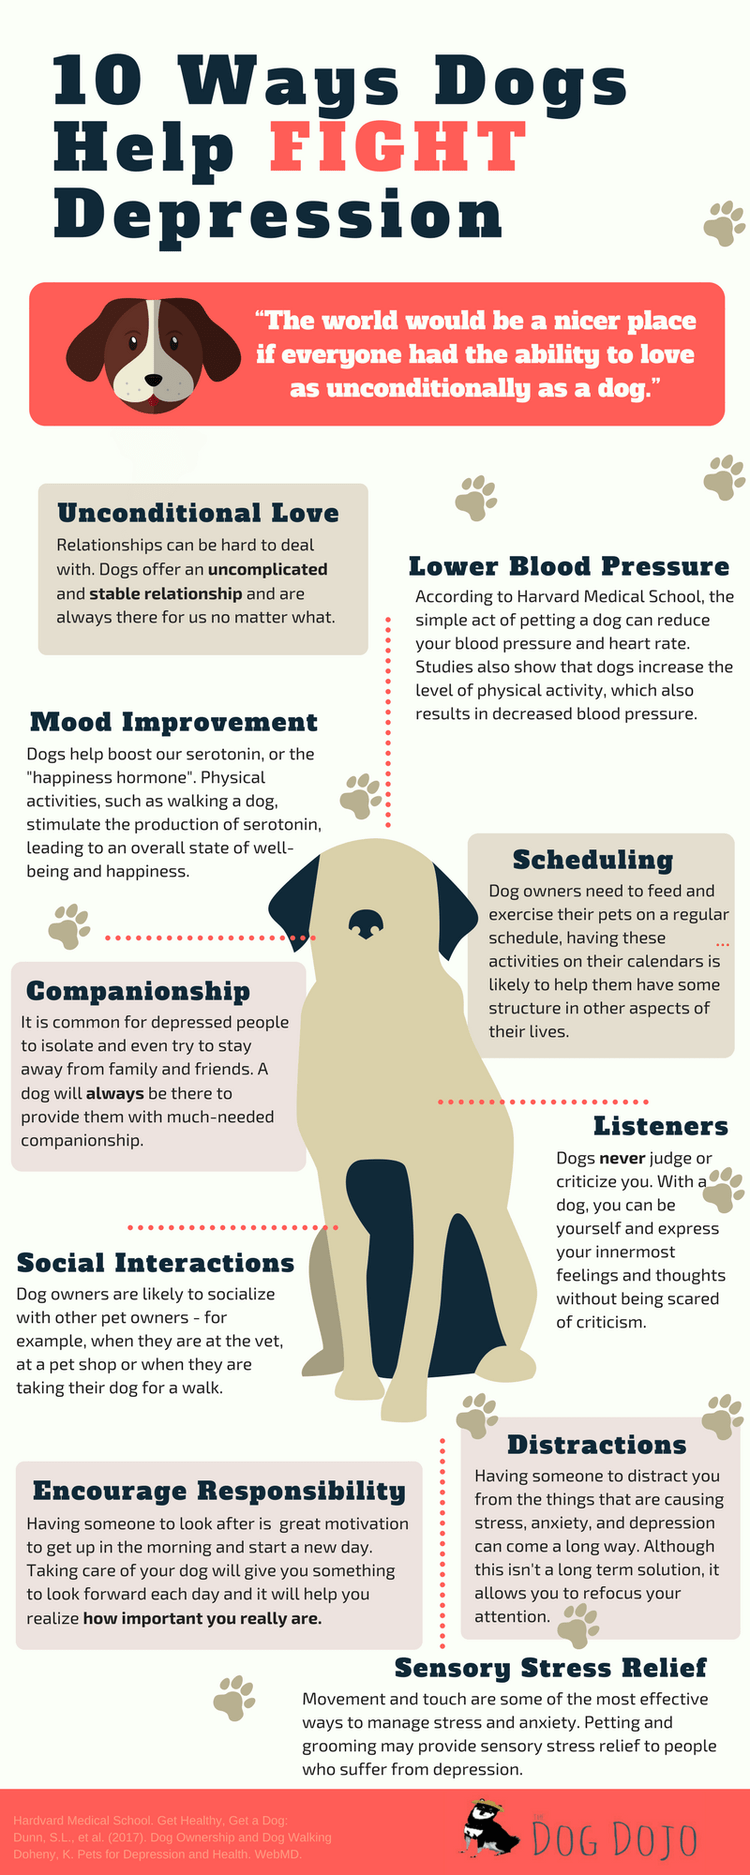 Do dogs decrease blood pressure?